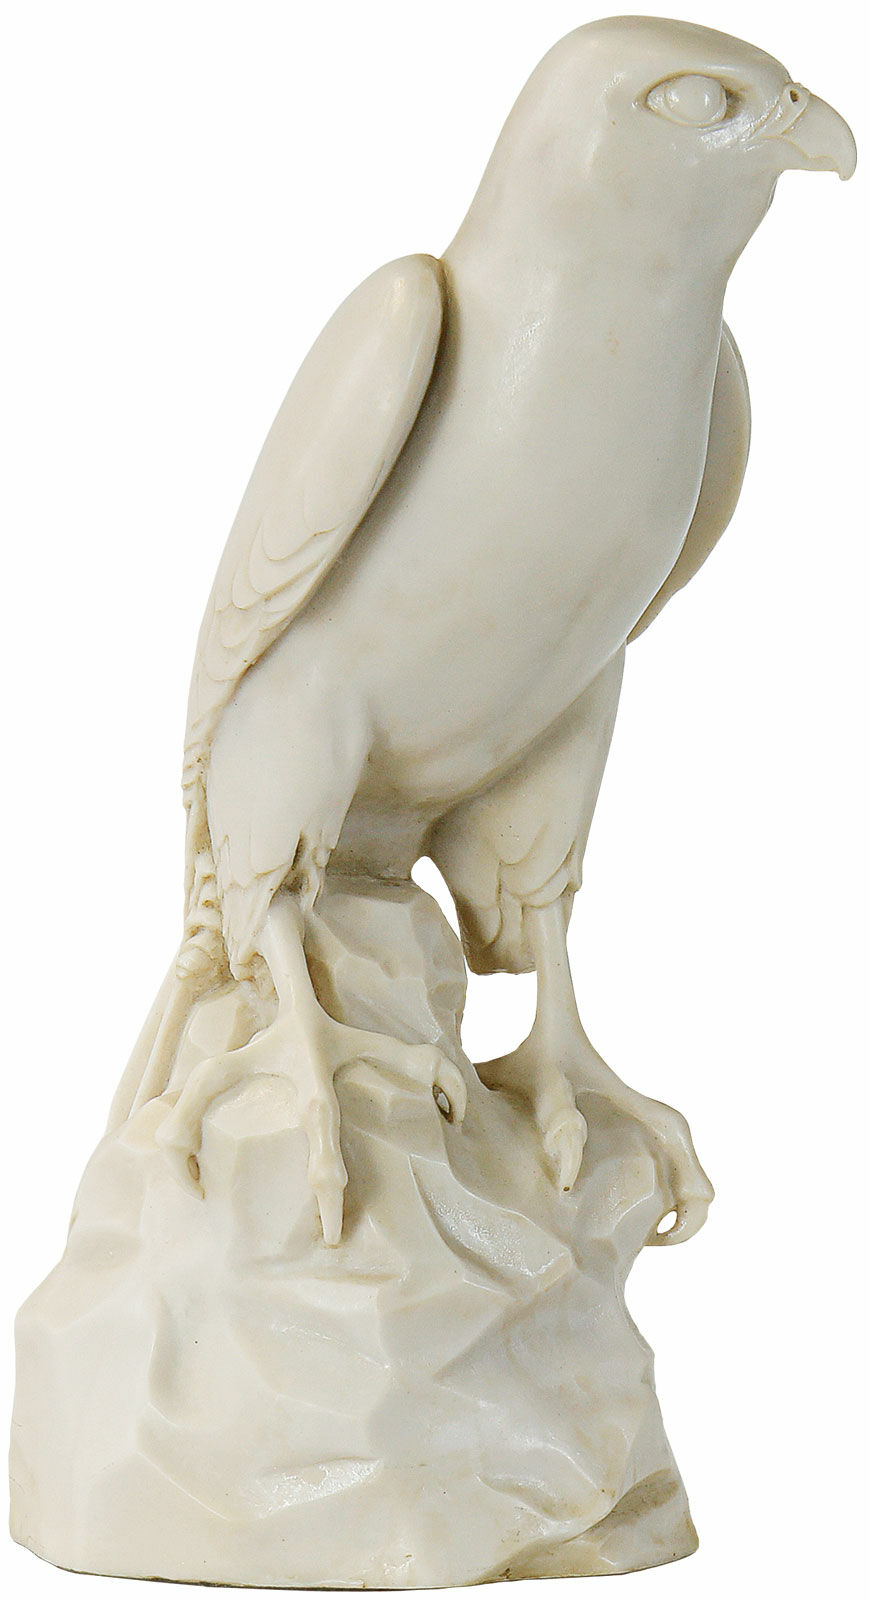 Skulptur "Falcon", version i kunstmarmor von Thomas Schöne